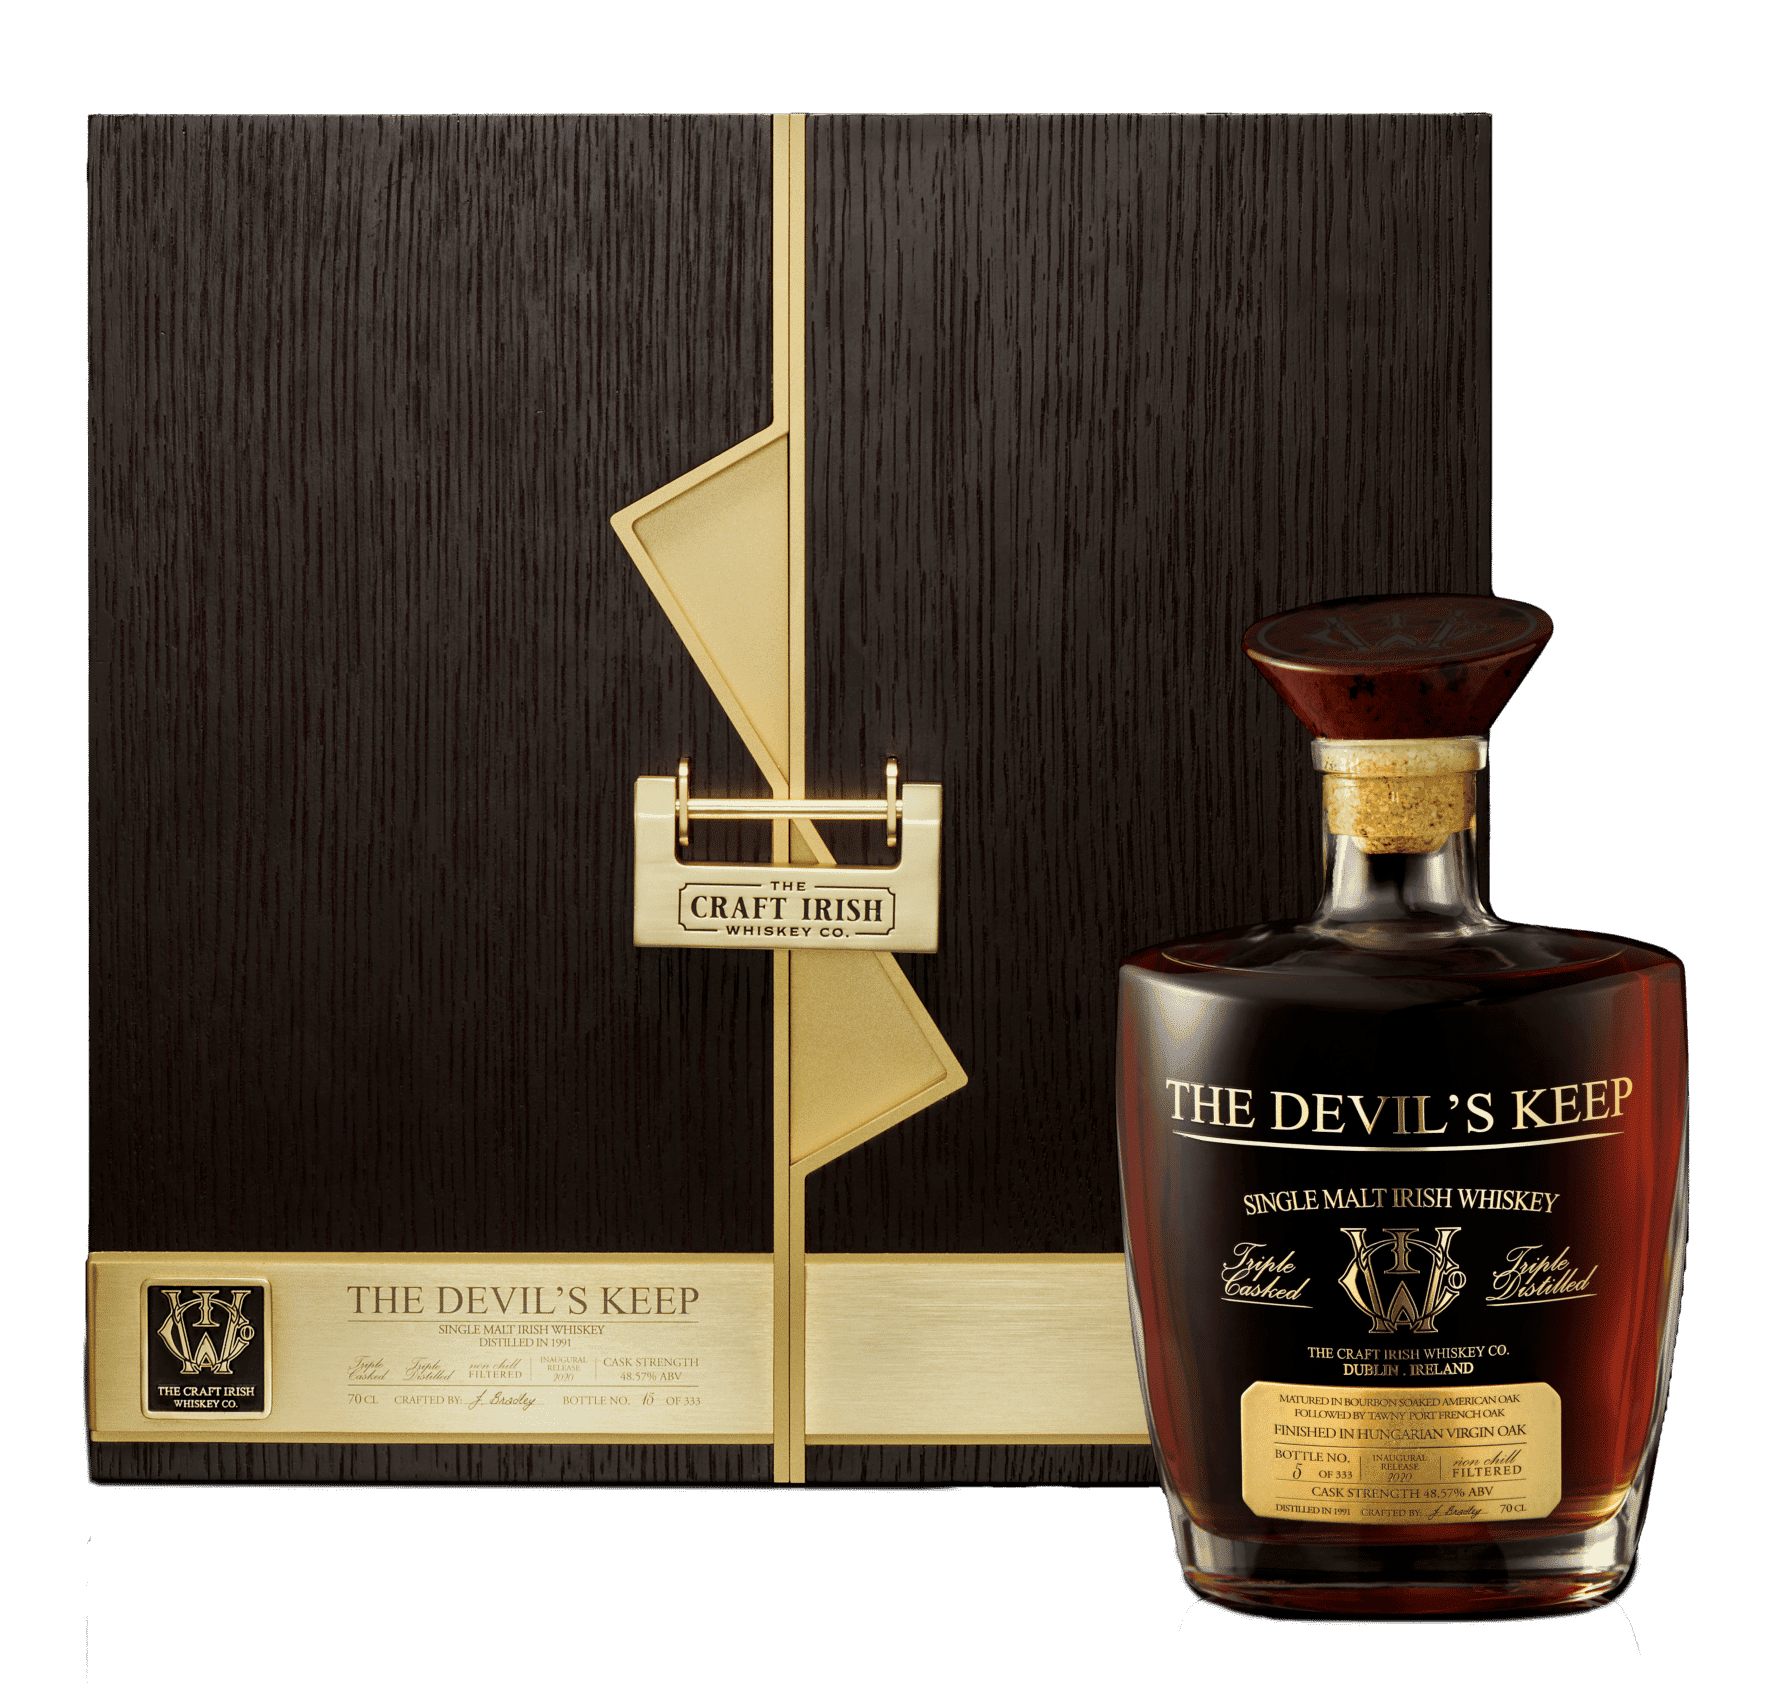 Best single malt irish whiskey, the Devil's keep